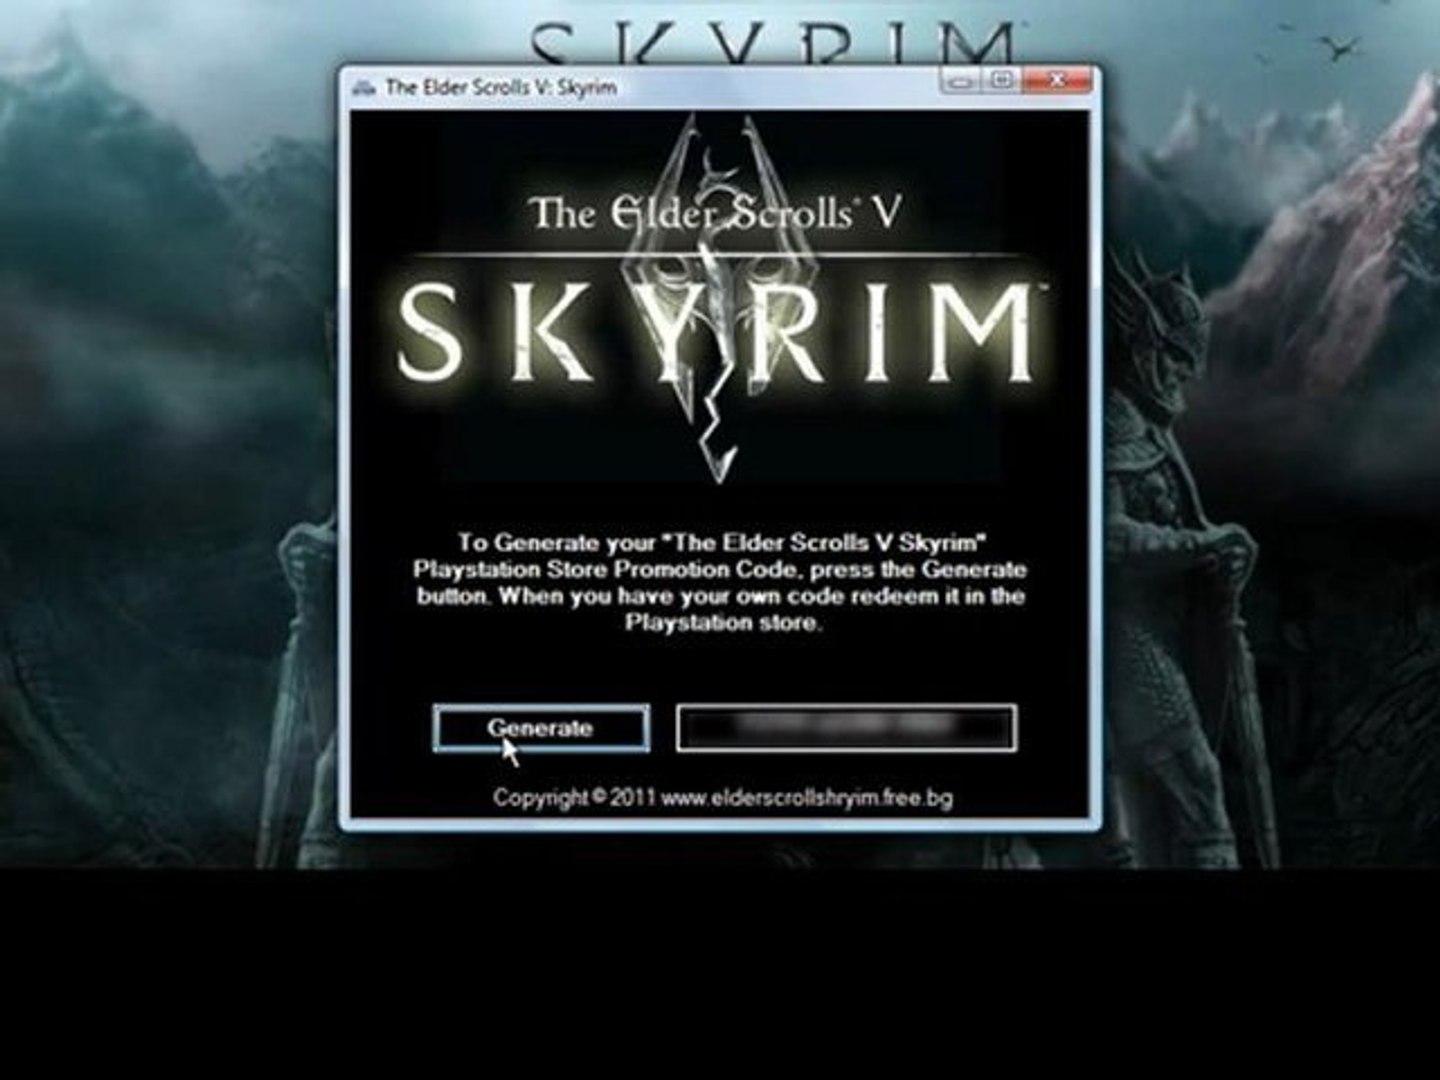 The Elder Scrolls V: Skyrim PS3 game free keys + crack download - video  Dailymotion